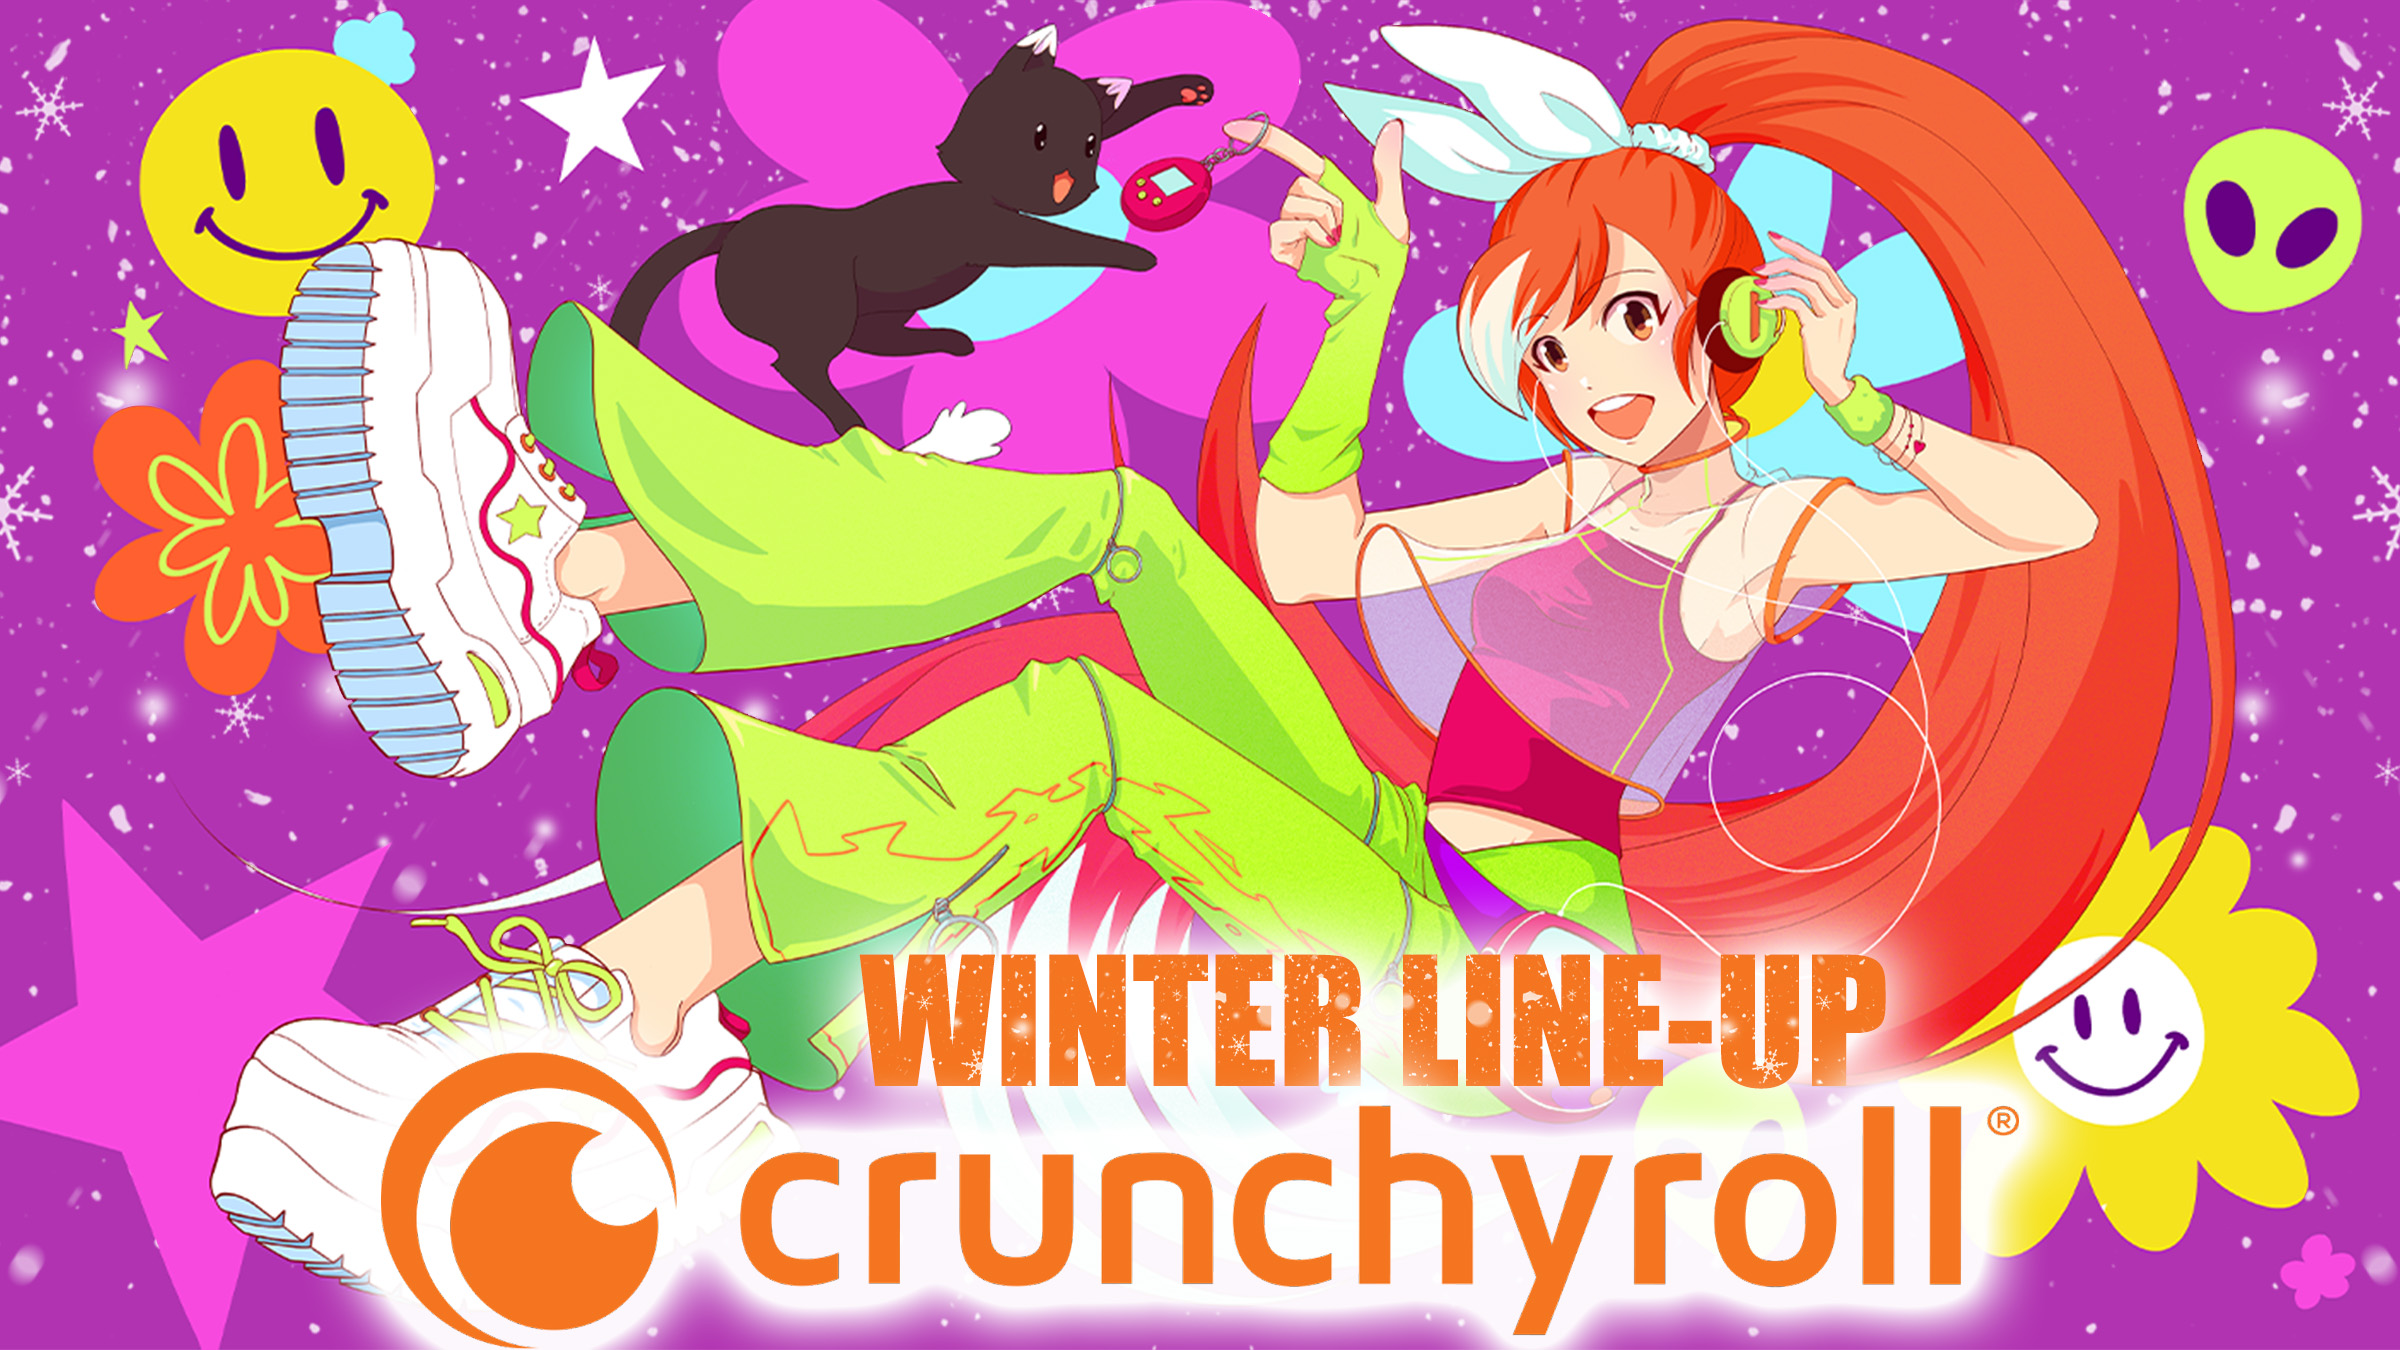 Crunchyroll-Winter-2023